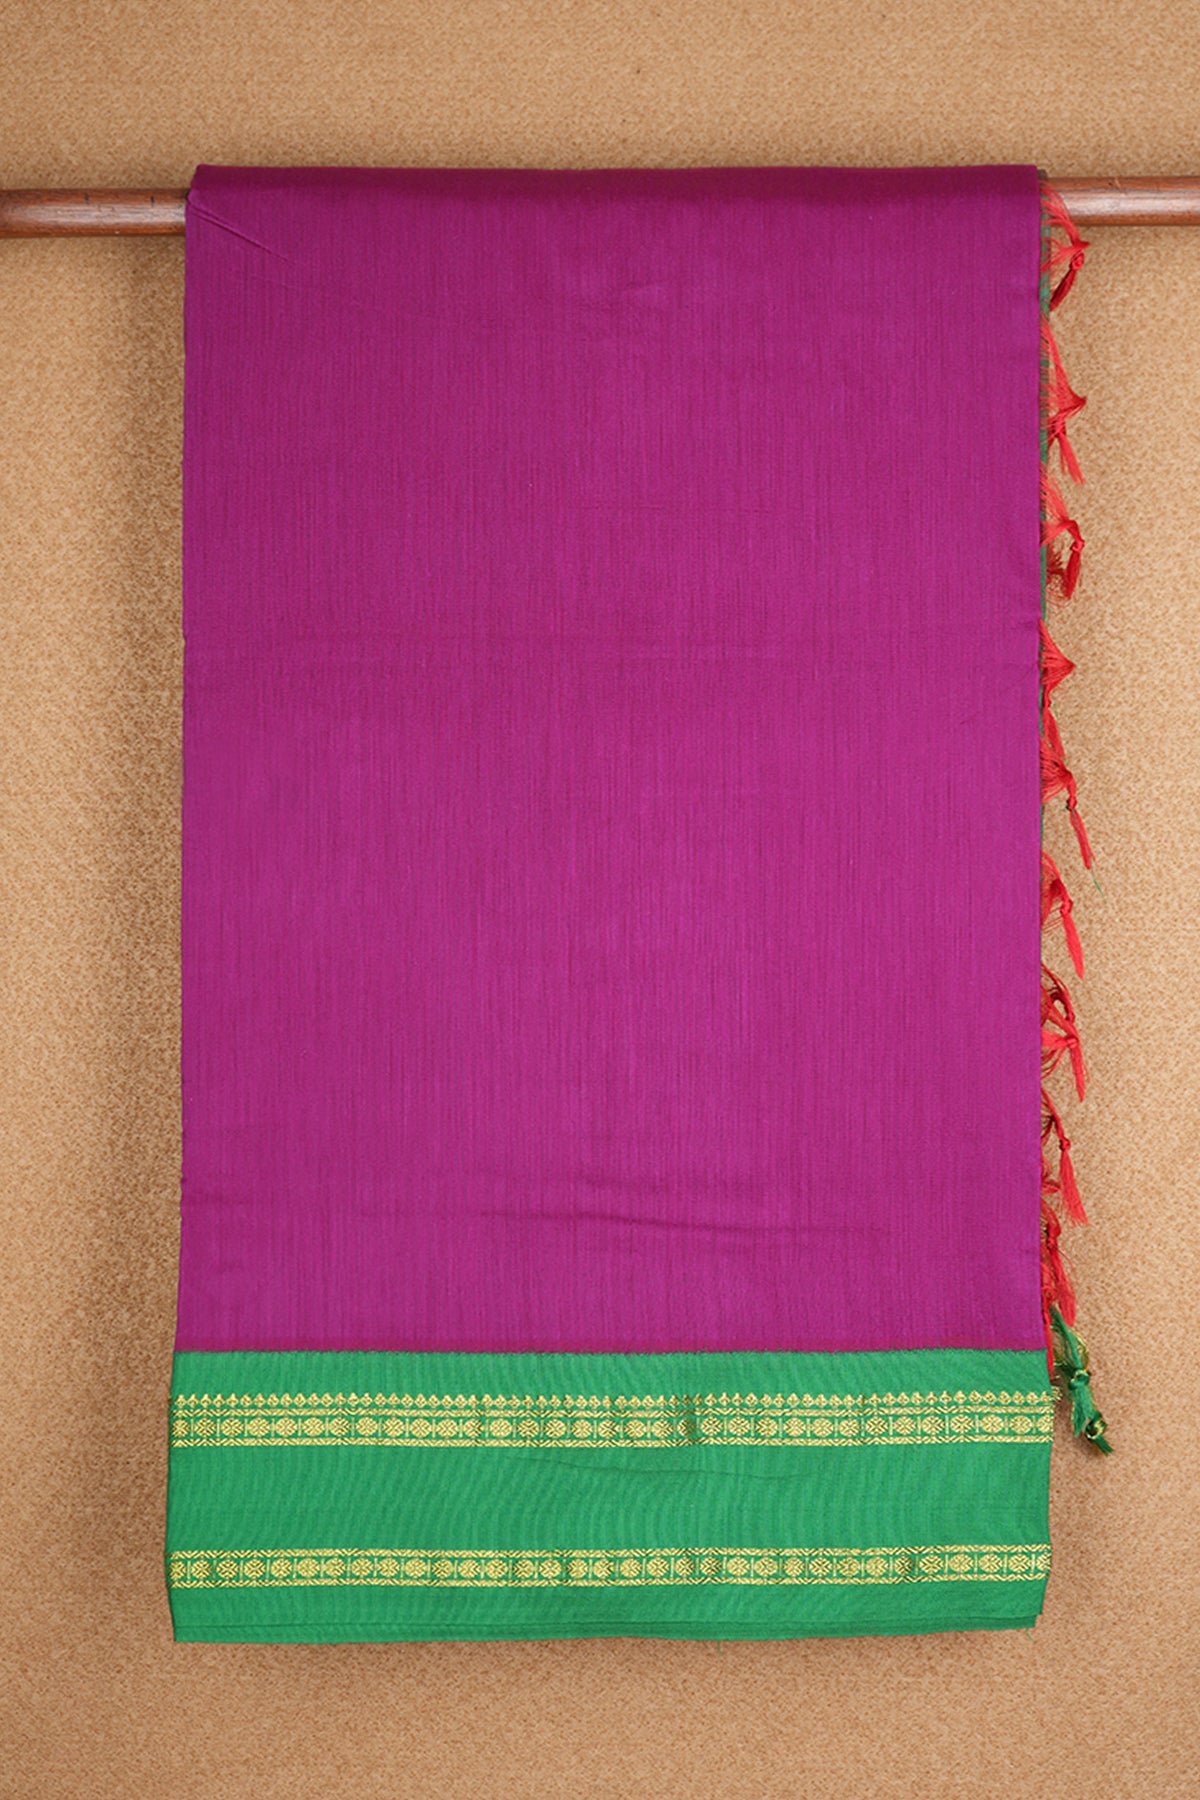 Contrast Rudraksh Zari Border Plain Purple Kalyani Cotton Saree